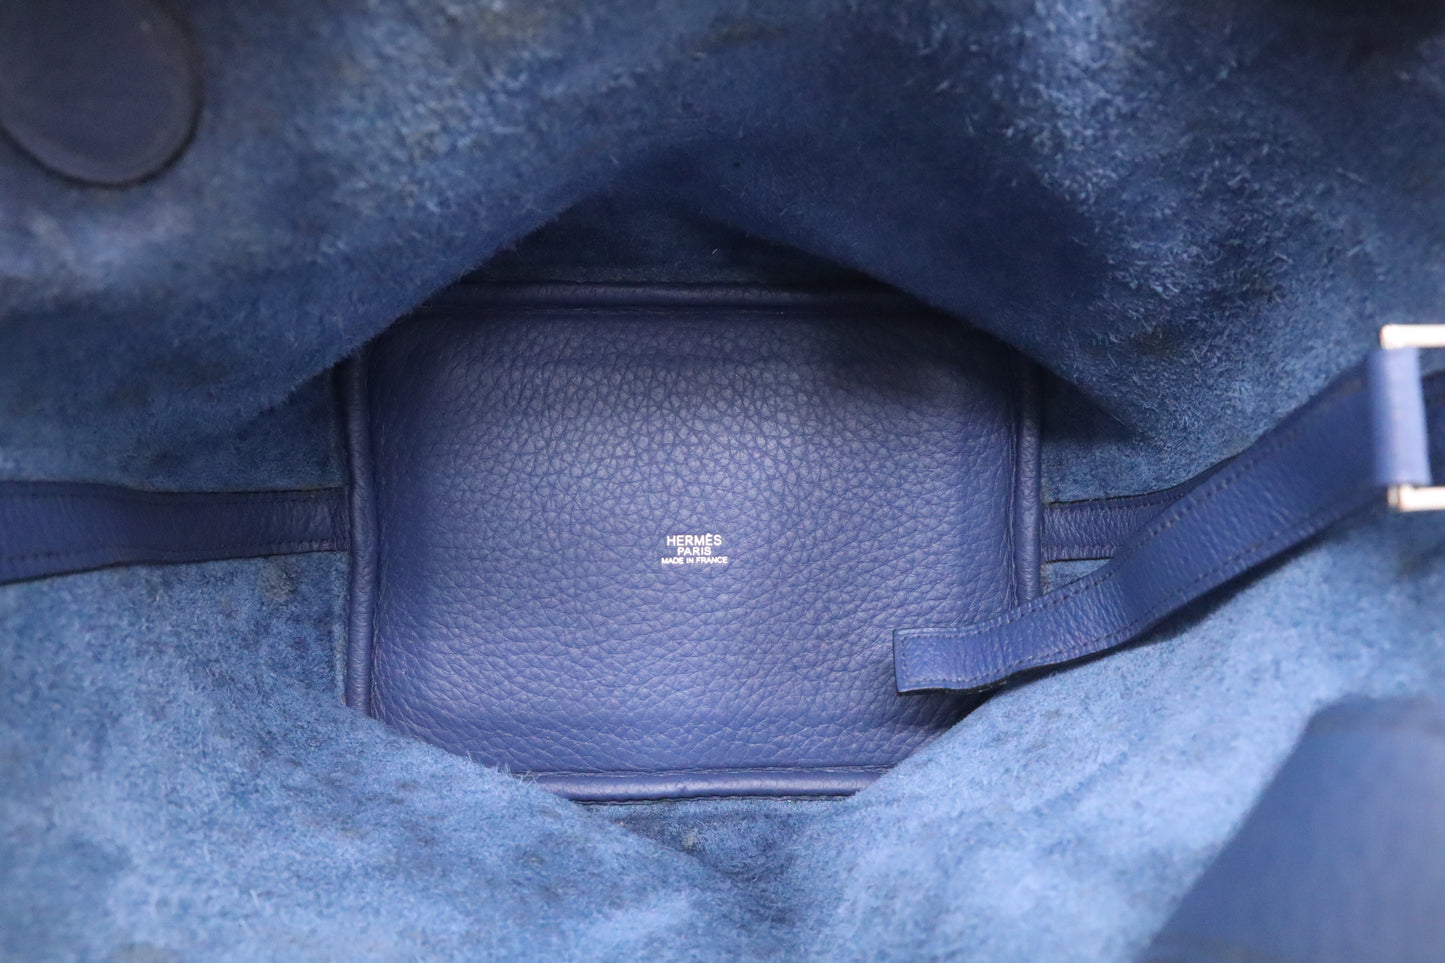 Hermes Picotin 22 in Dark Blue Leather